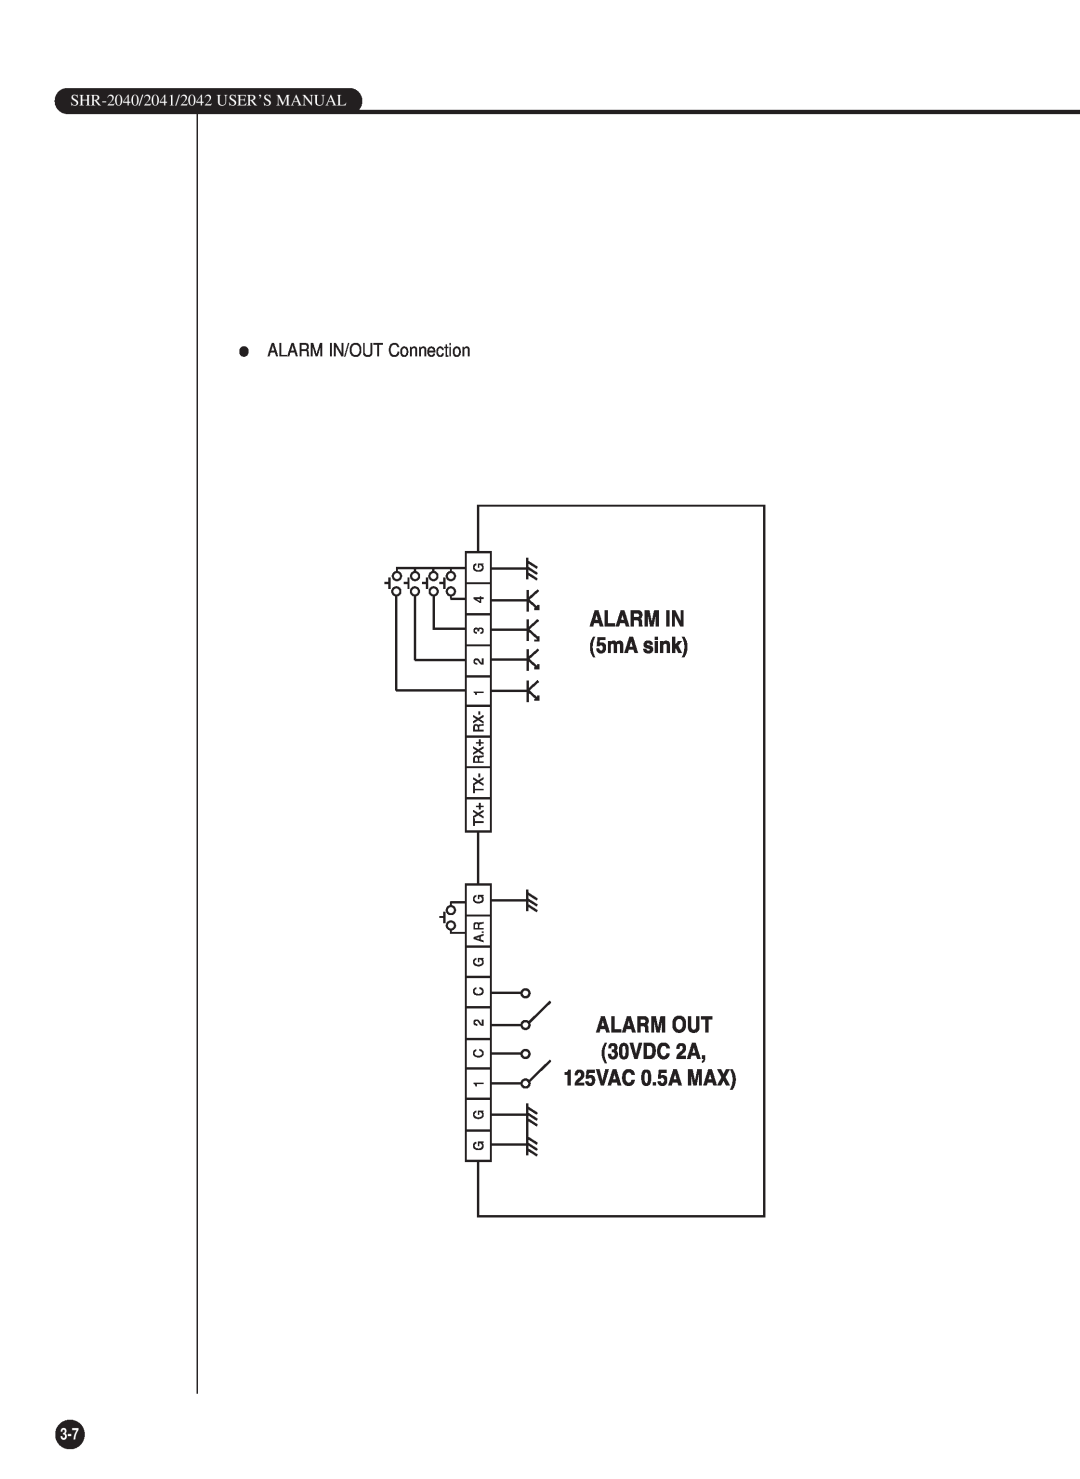 Samsung SHR-2040P/GAR, SHR-2042P, SHR-2040PX, SHR-2040P/XEC manual ALARM IN/OUT Connection, SHR-2040/2041/2042 USER’S MANUAL 